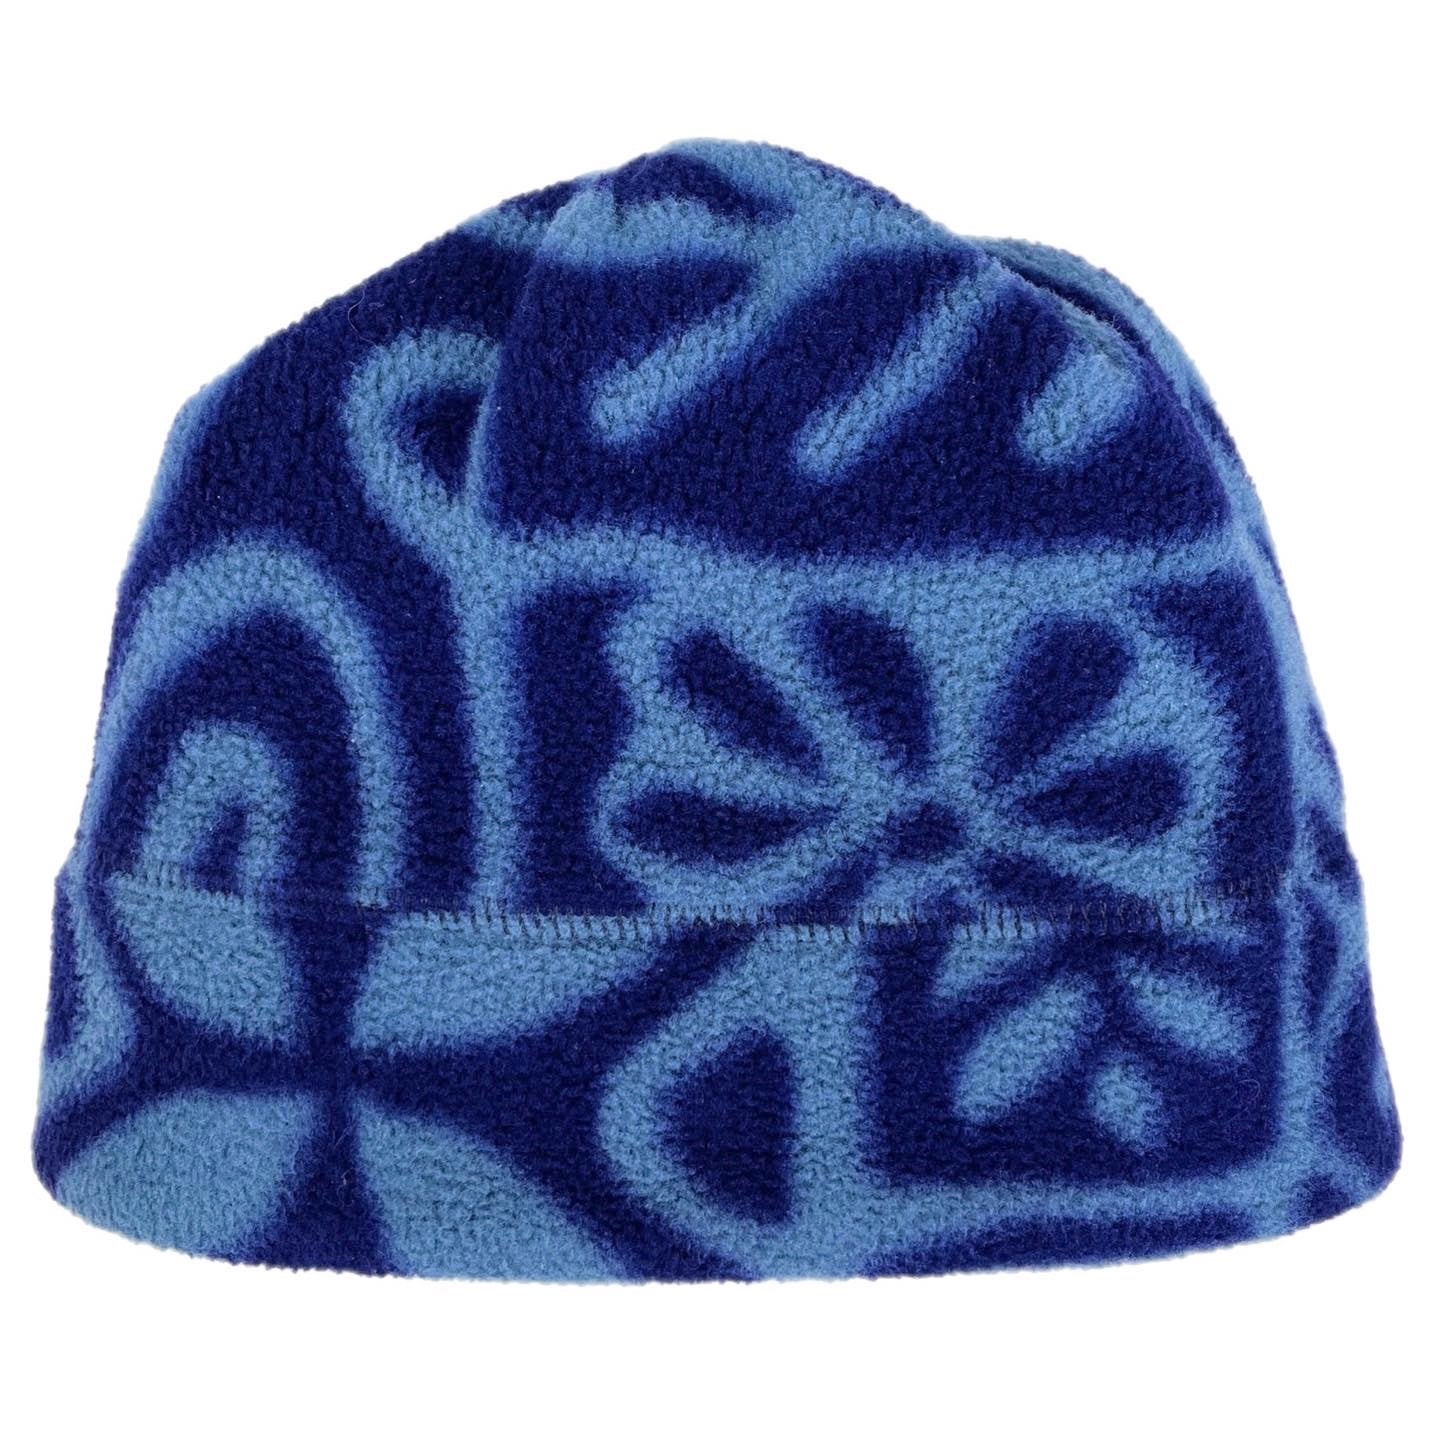 1995 Patagonia Printed Synchilla Hat, Island Block: Bluesmoke (M)